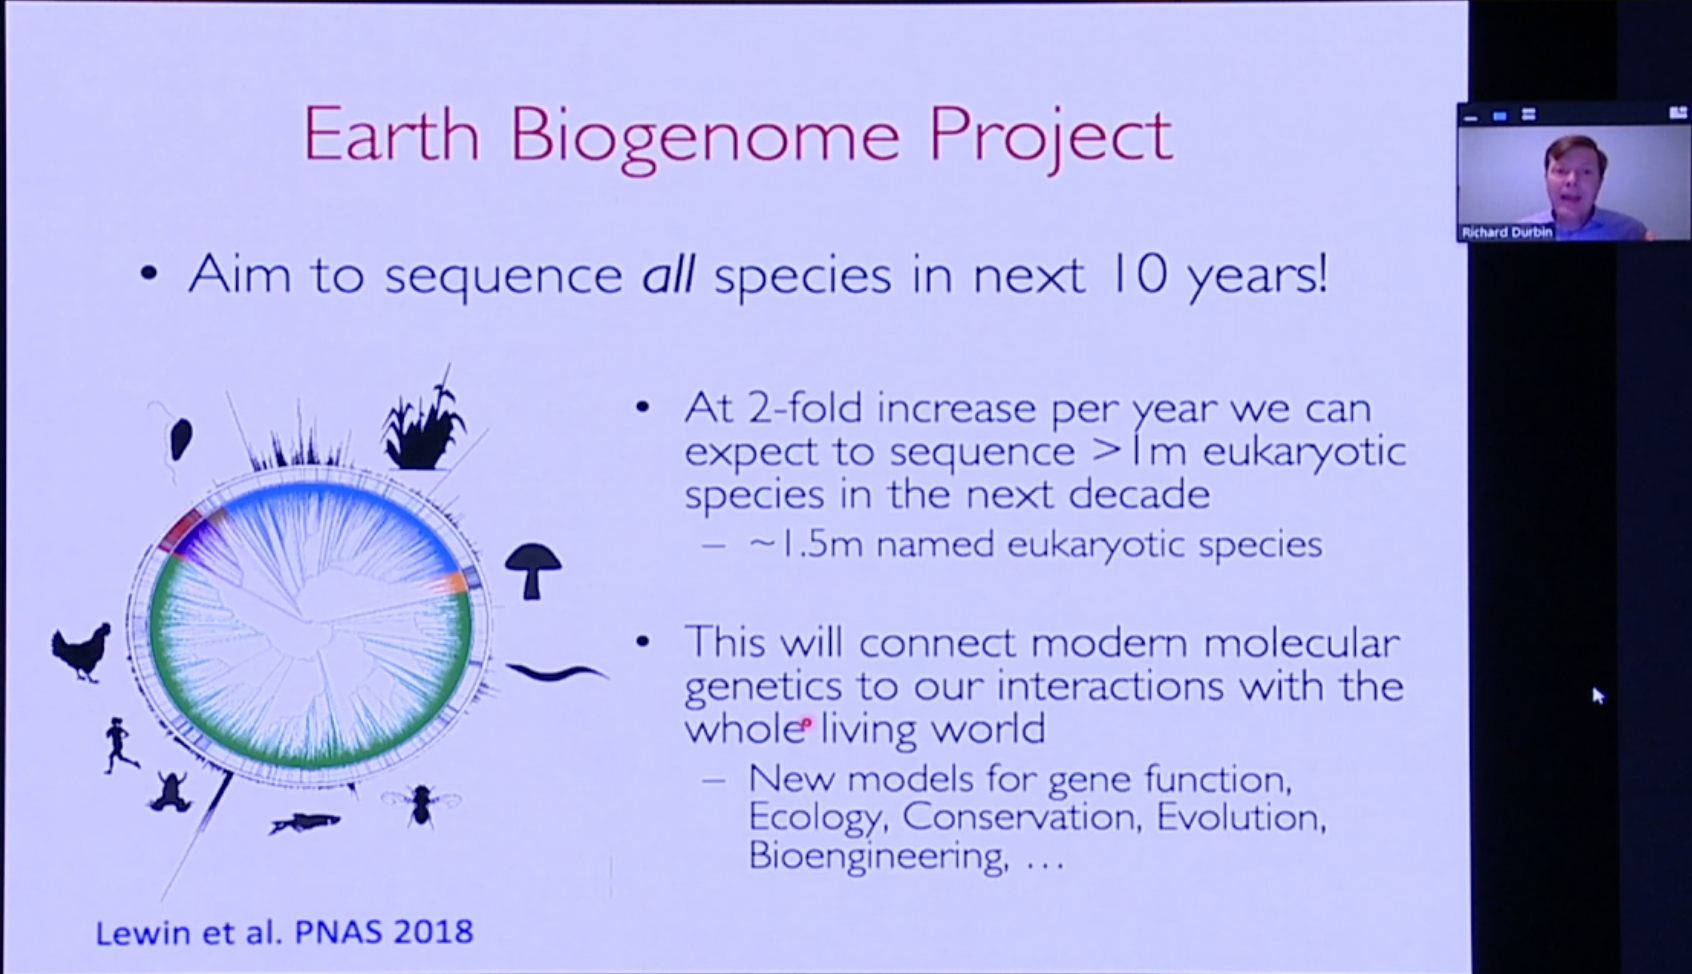 icons/earth-biogenome